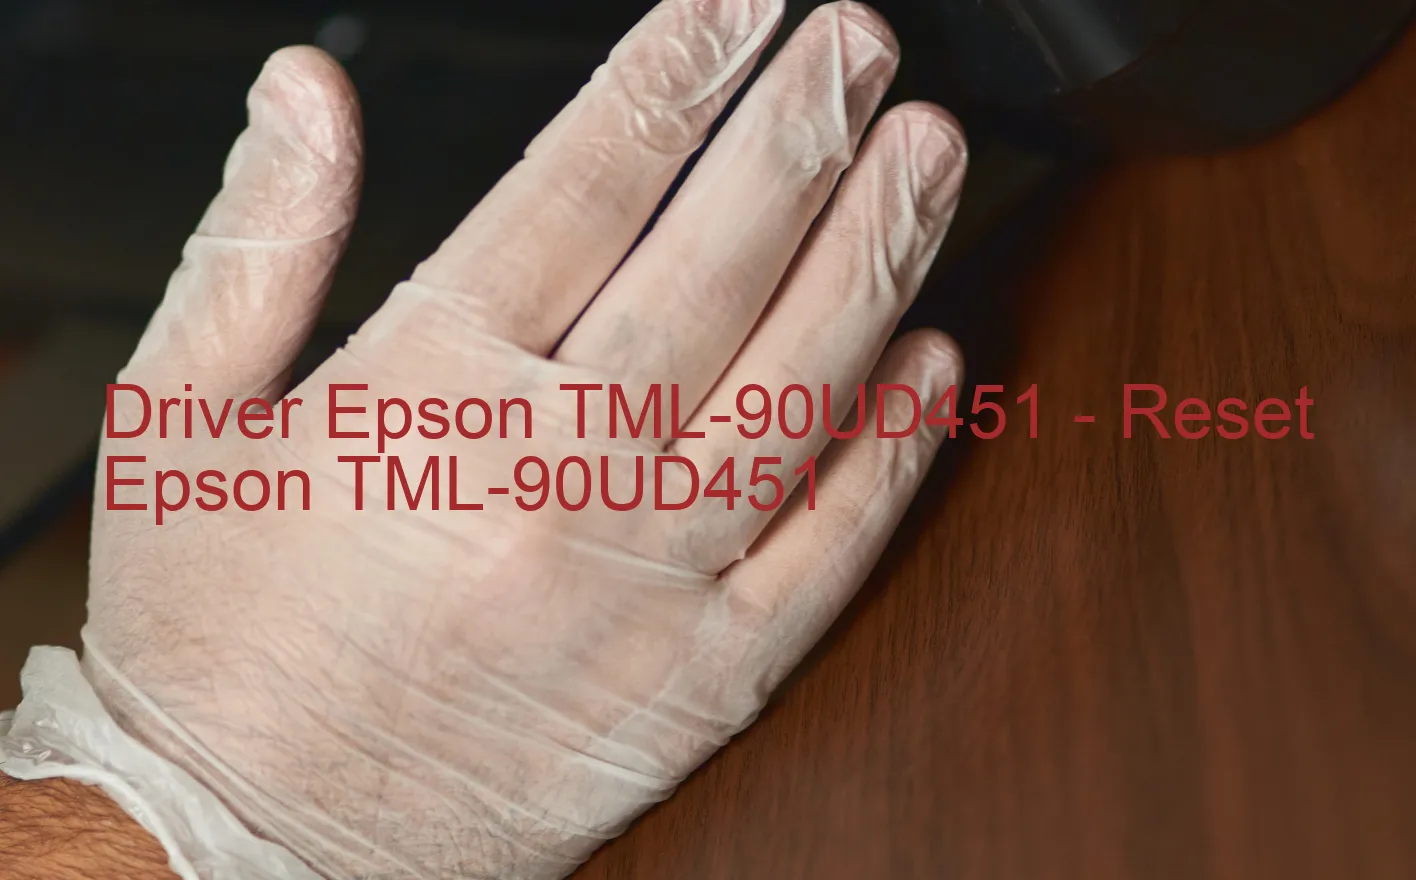 Epson TML-90UD451のドライバー、Epson TML-90UD451のリセットソフトウェア